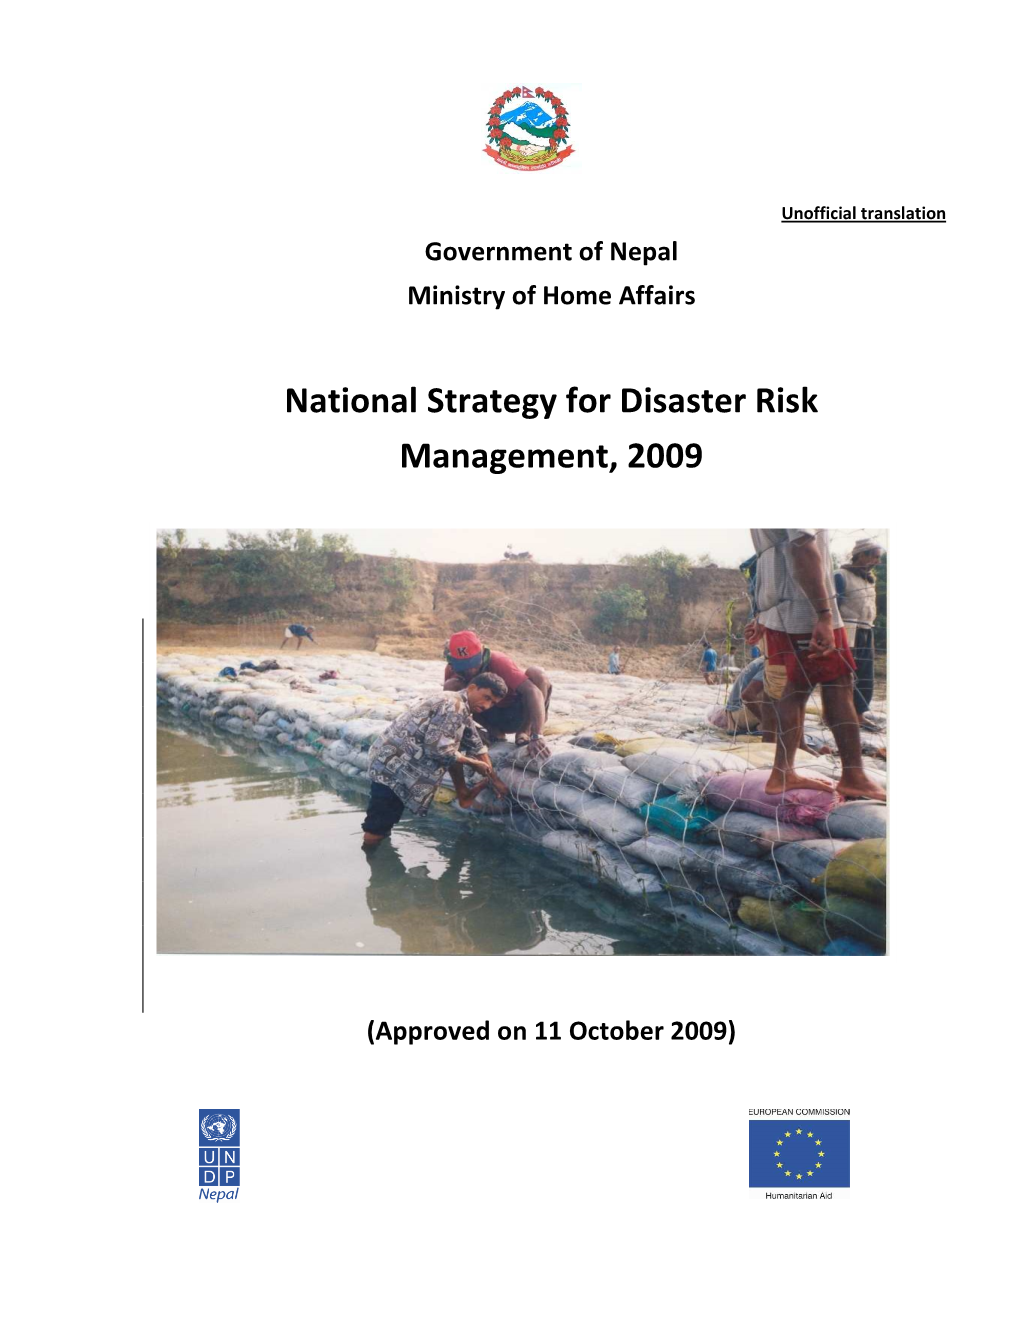 National Strategy for Disaster Risk Management, 2009